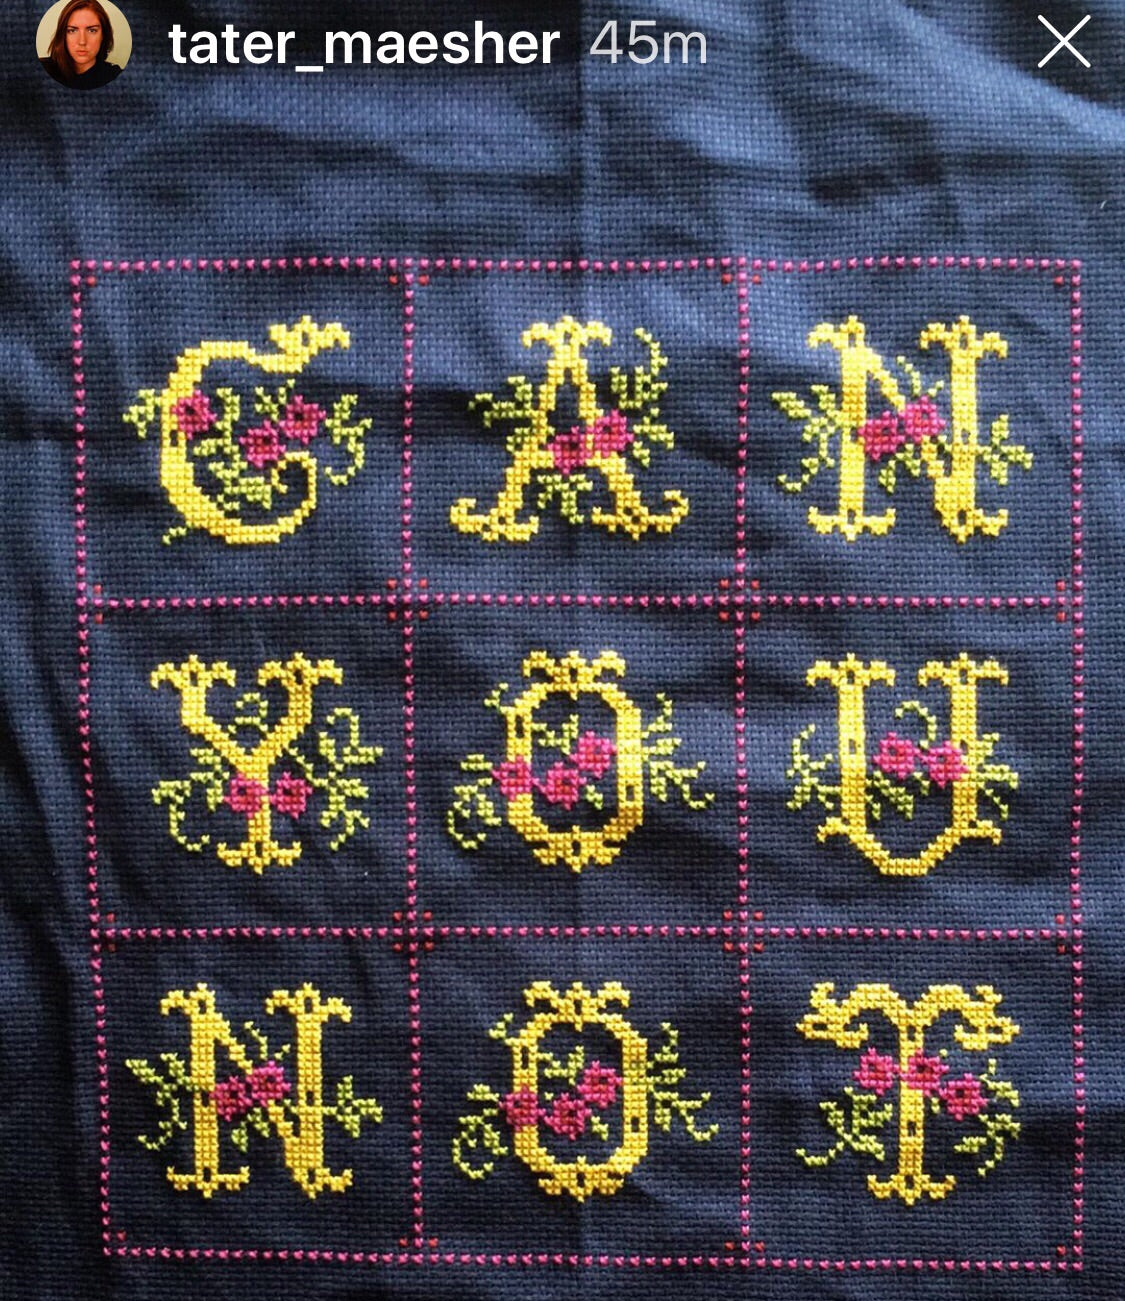 Cross Stitch Carpet / How to do cross stitch / क्रॉस स्टिच की आसनी कैसे  बनाये 